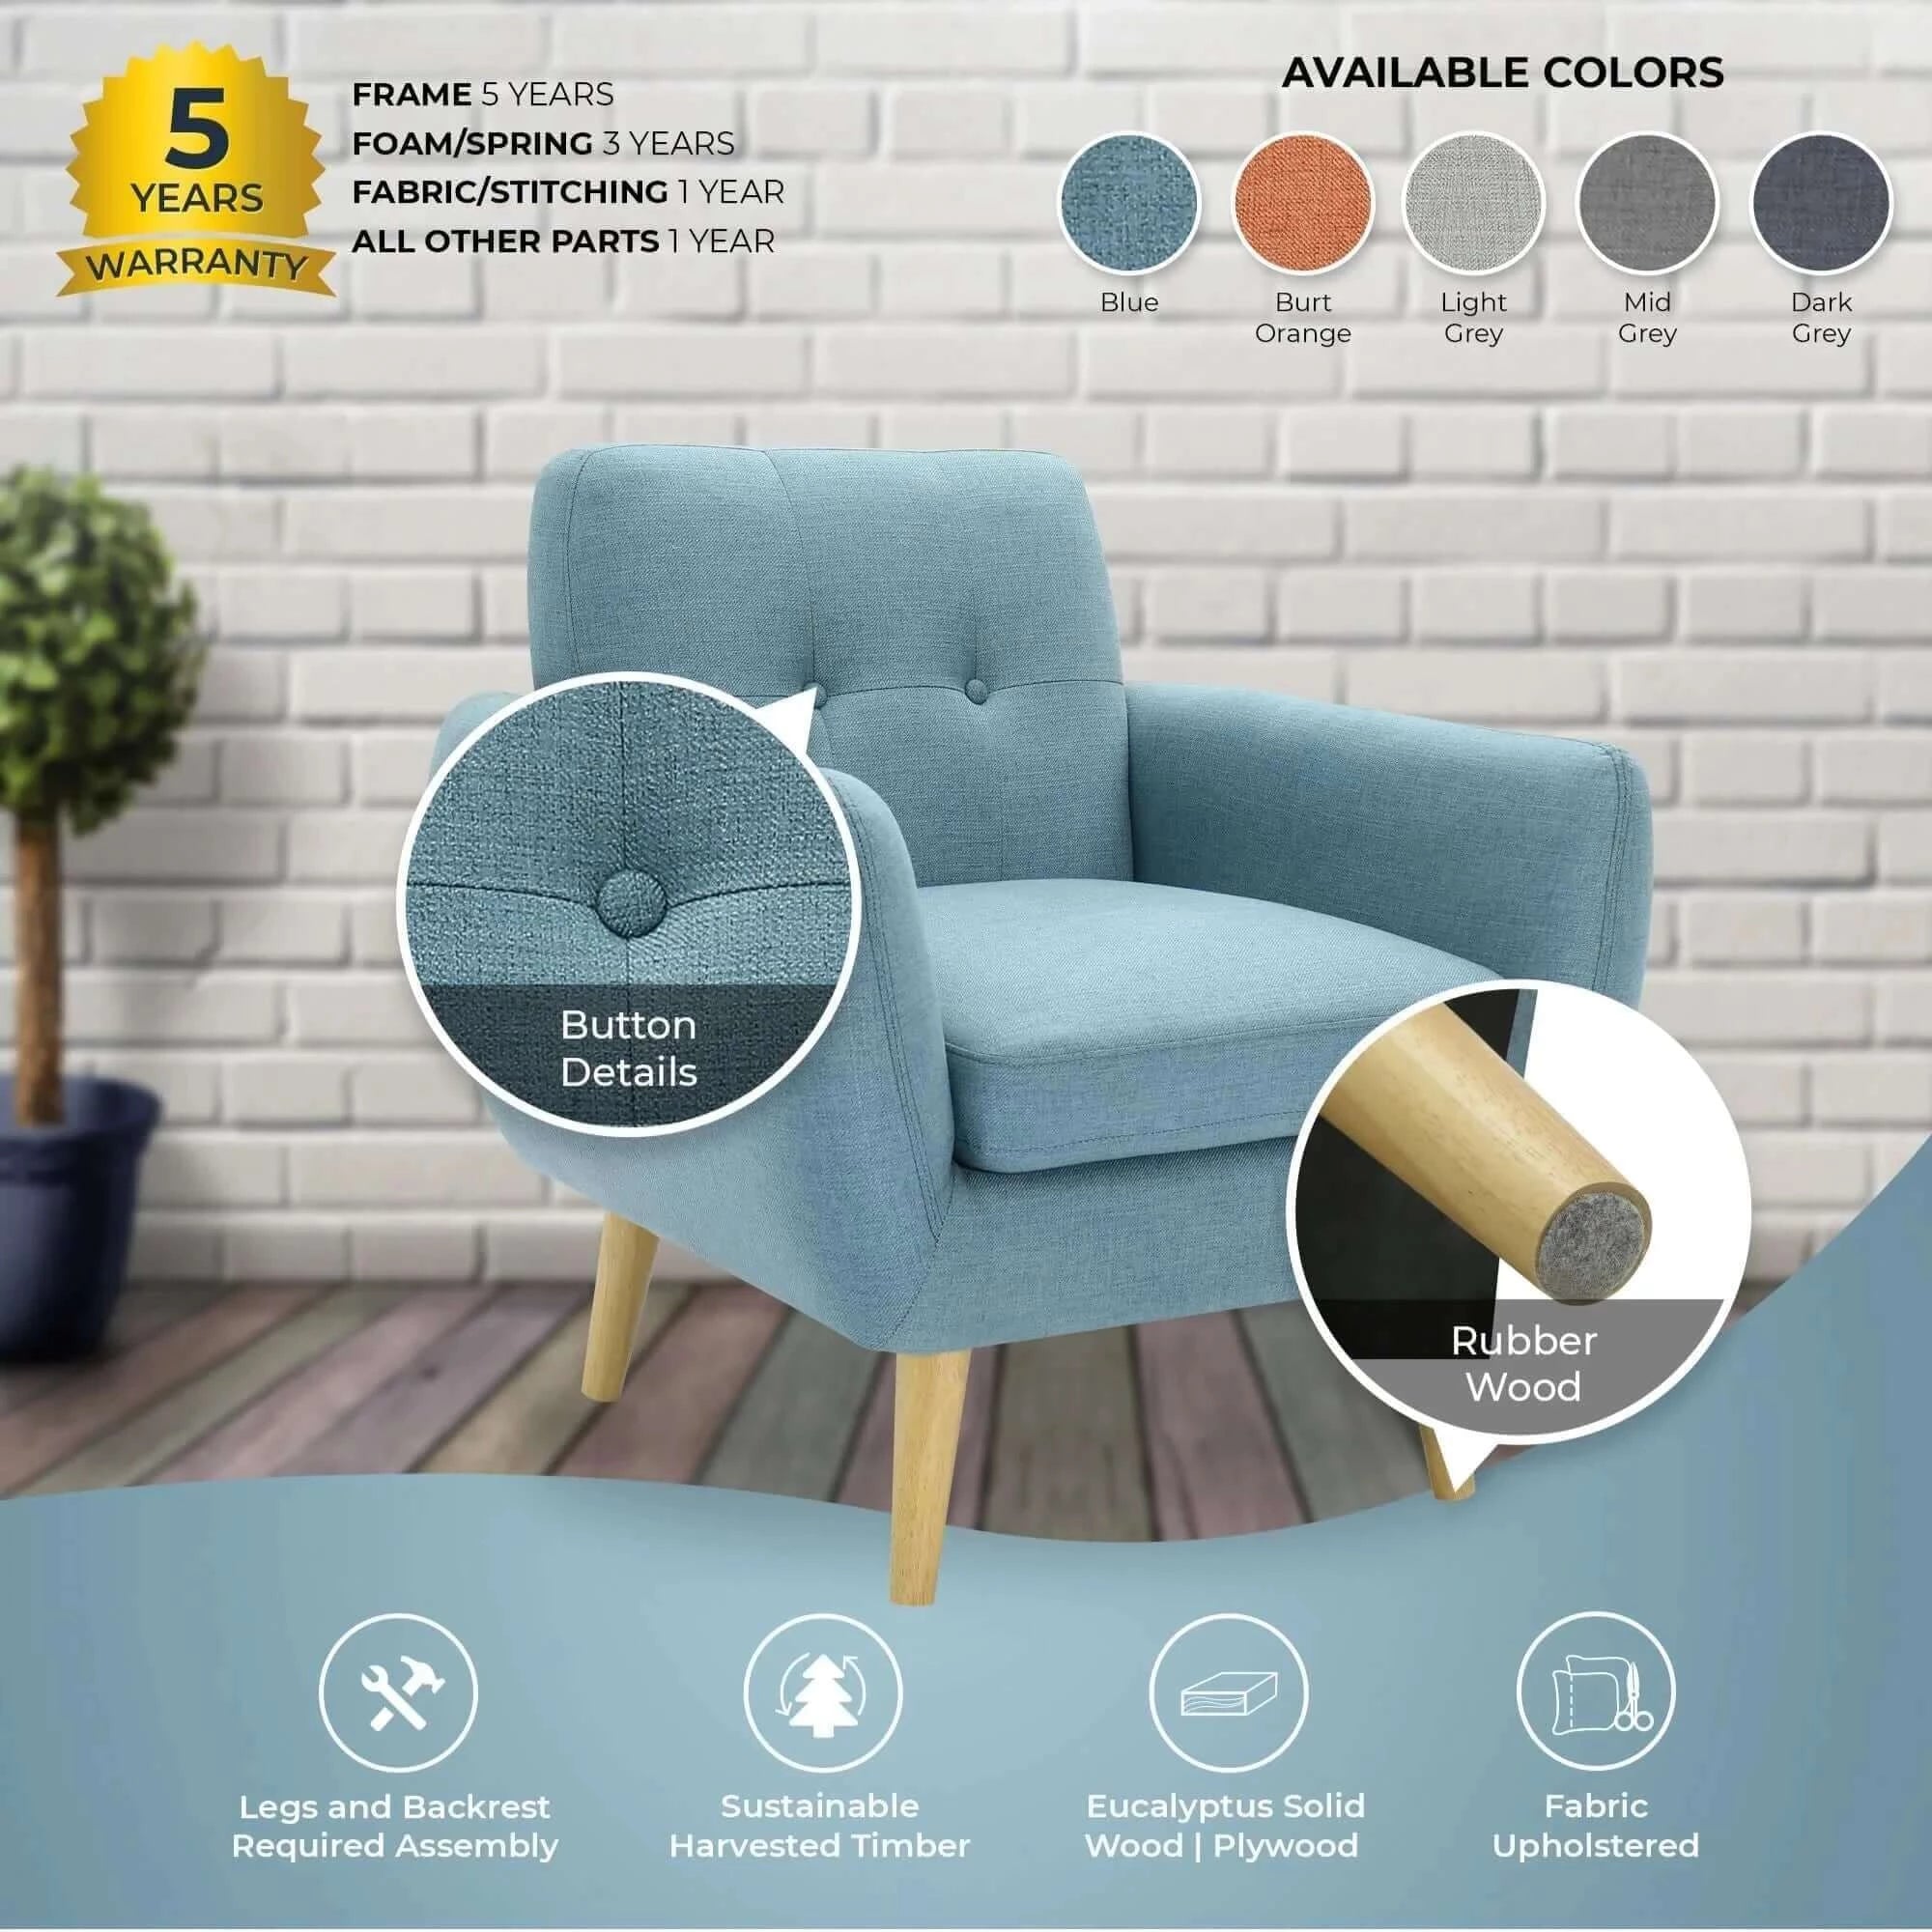 Buy Dane Single Seater Fabric Upholstered Sofa - Blue in Australia -Upinteriors